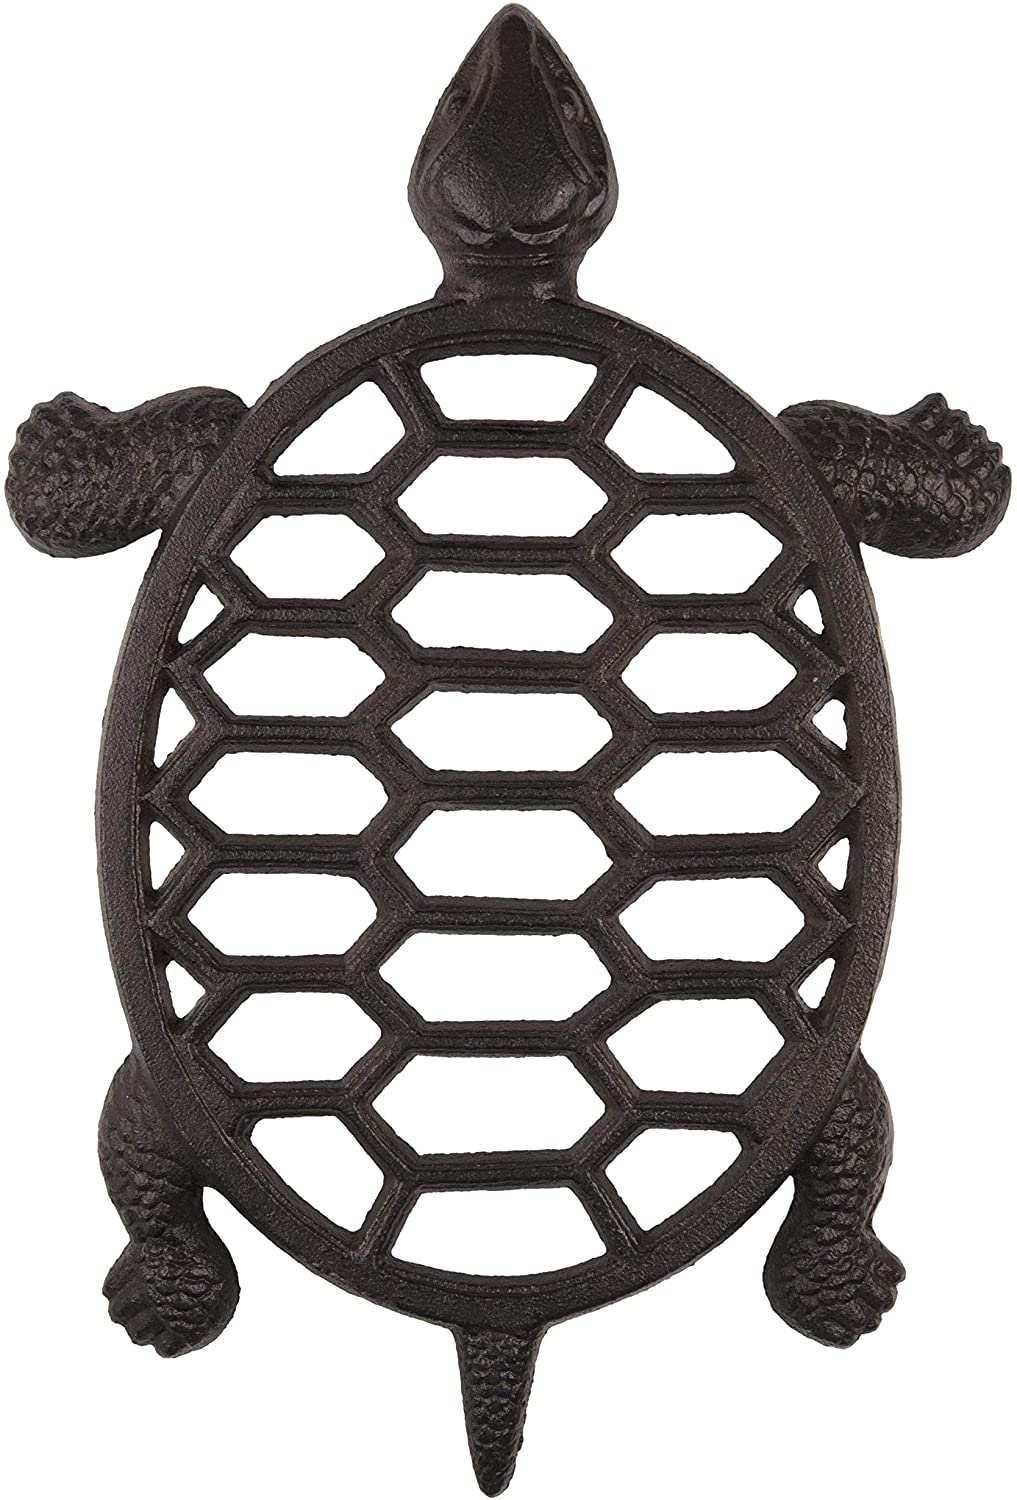 Cast Iron Turtle Trivet